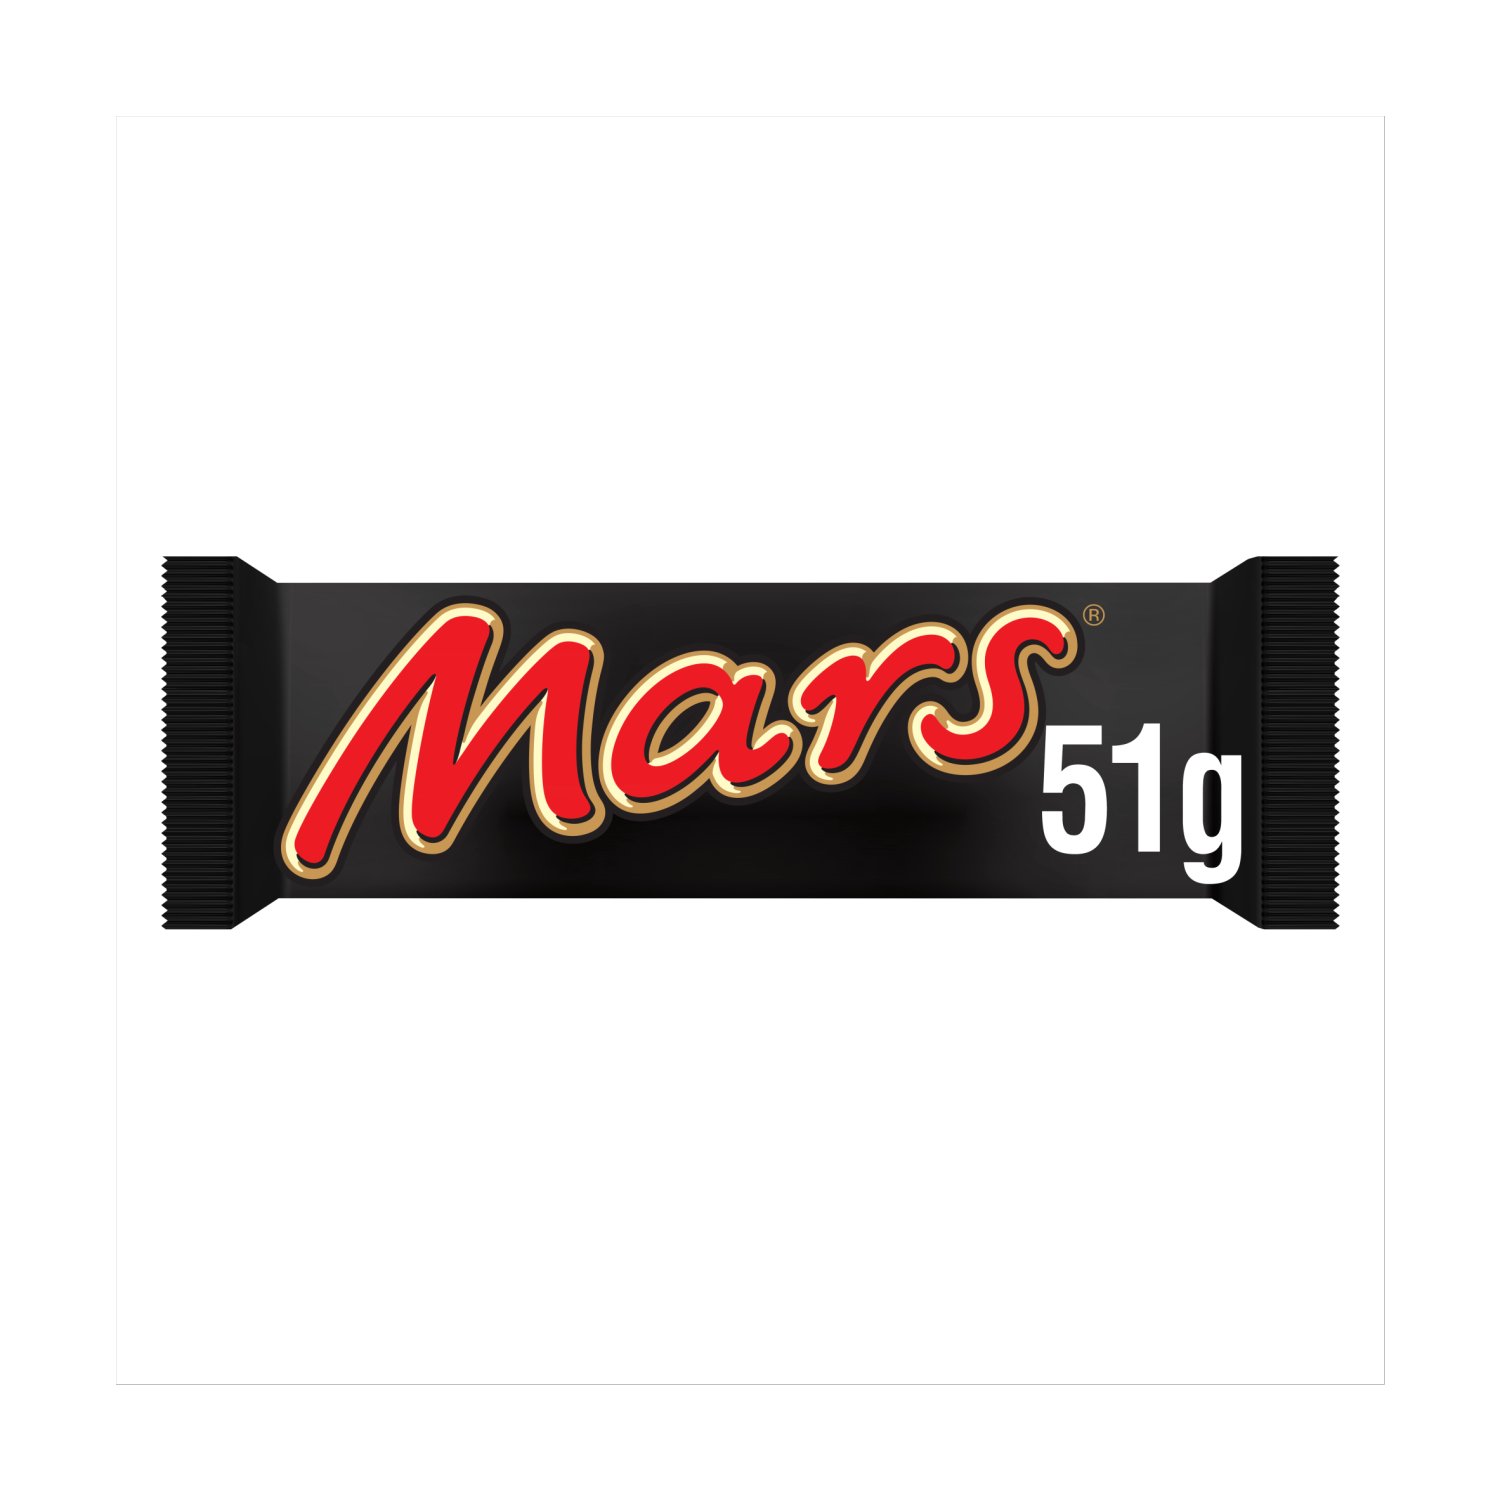 Mars Single (51 g)